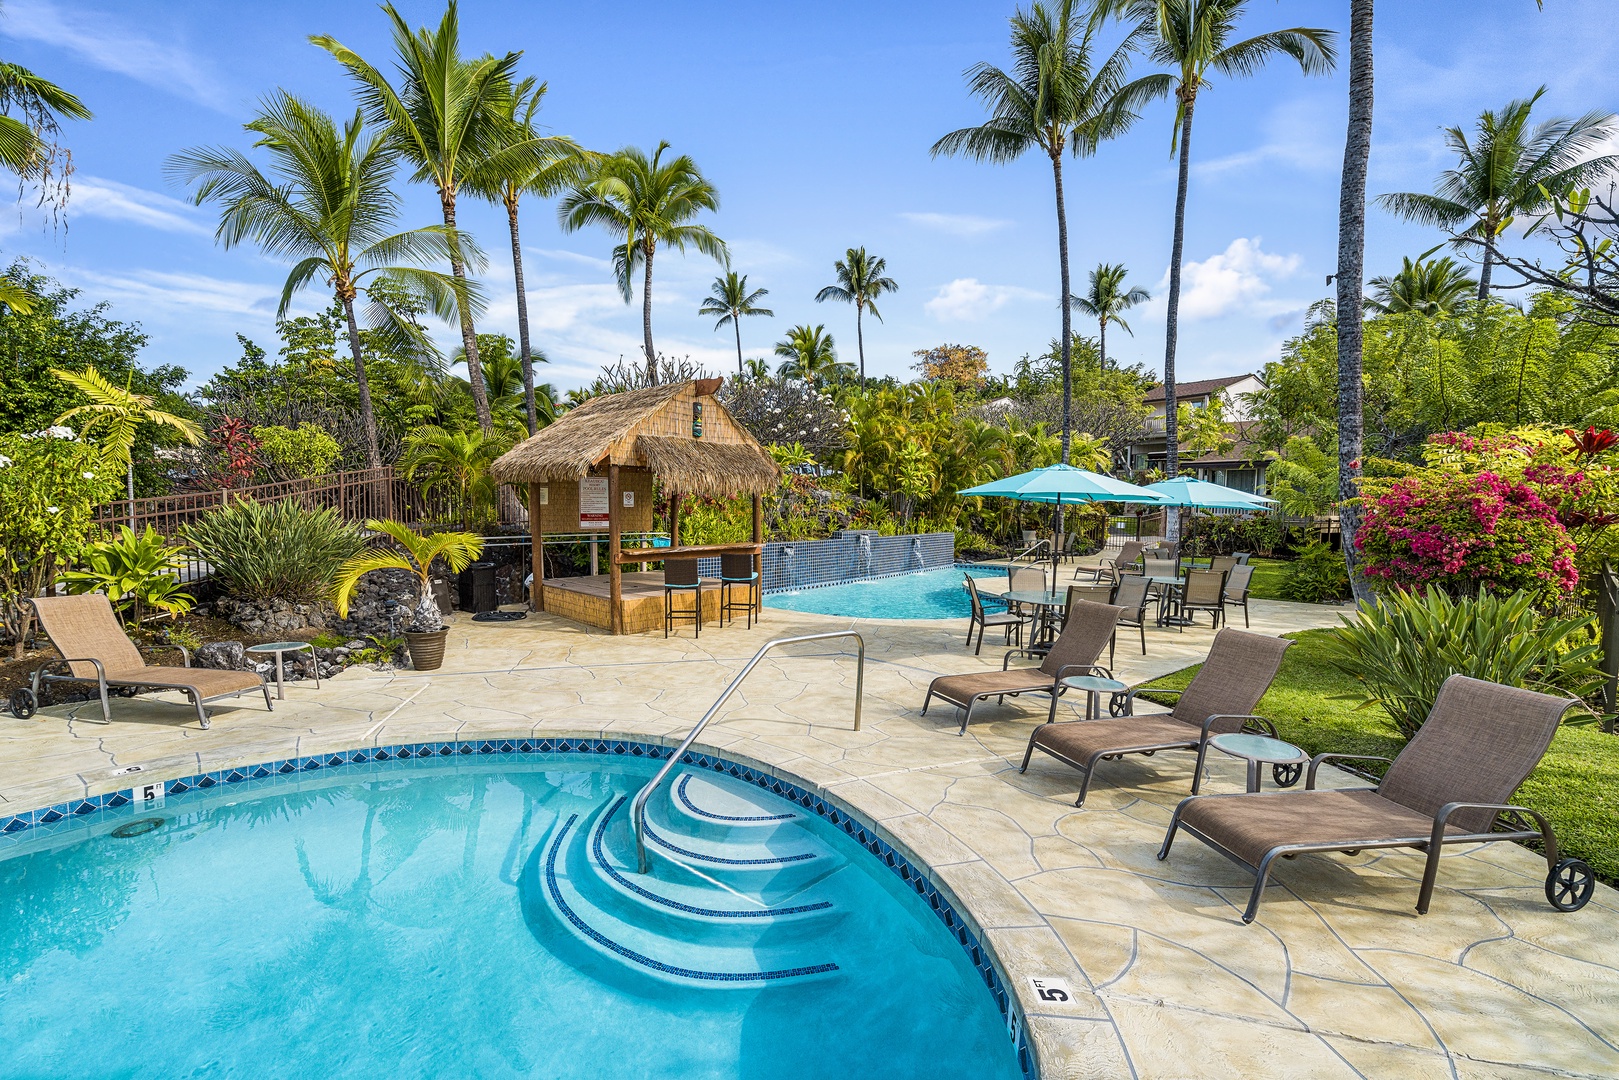 Kailua-Kona Vacation Rentals, Keauhou Resort 116 - Complex Pool